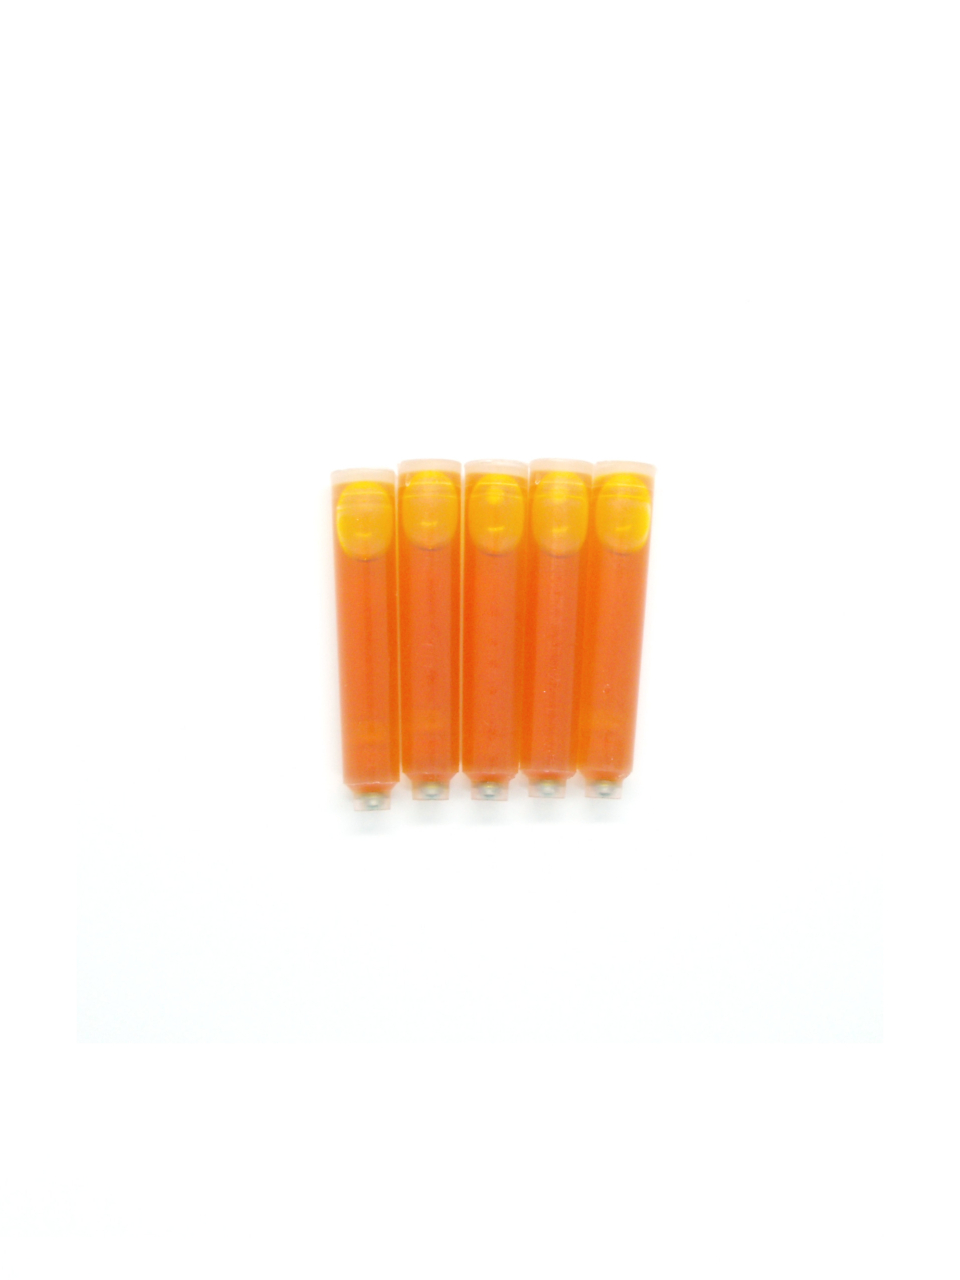 PenConverter Ink Cartridges For Nemosine Fountain Pens (Yellow)